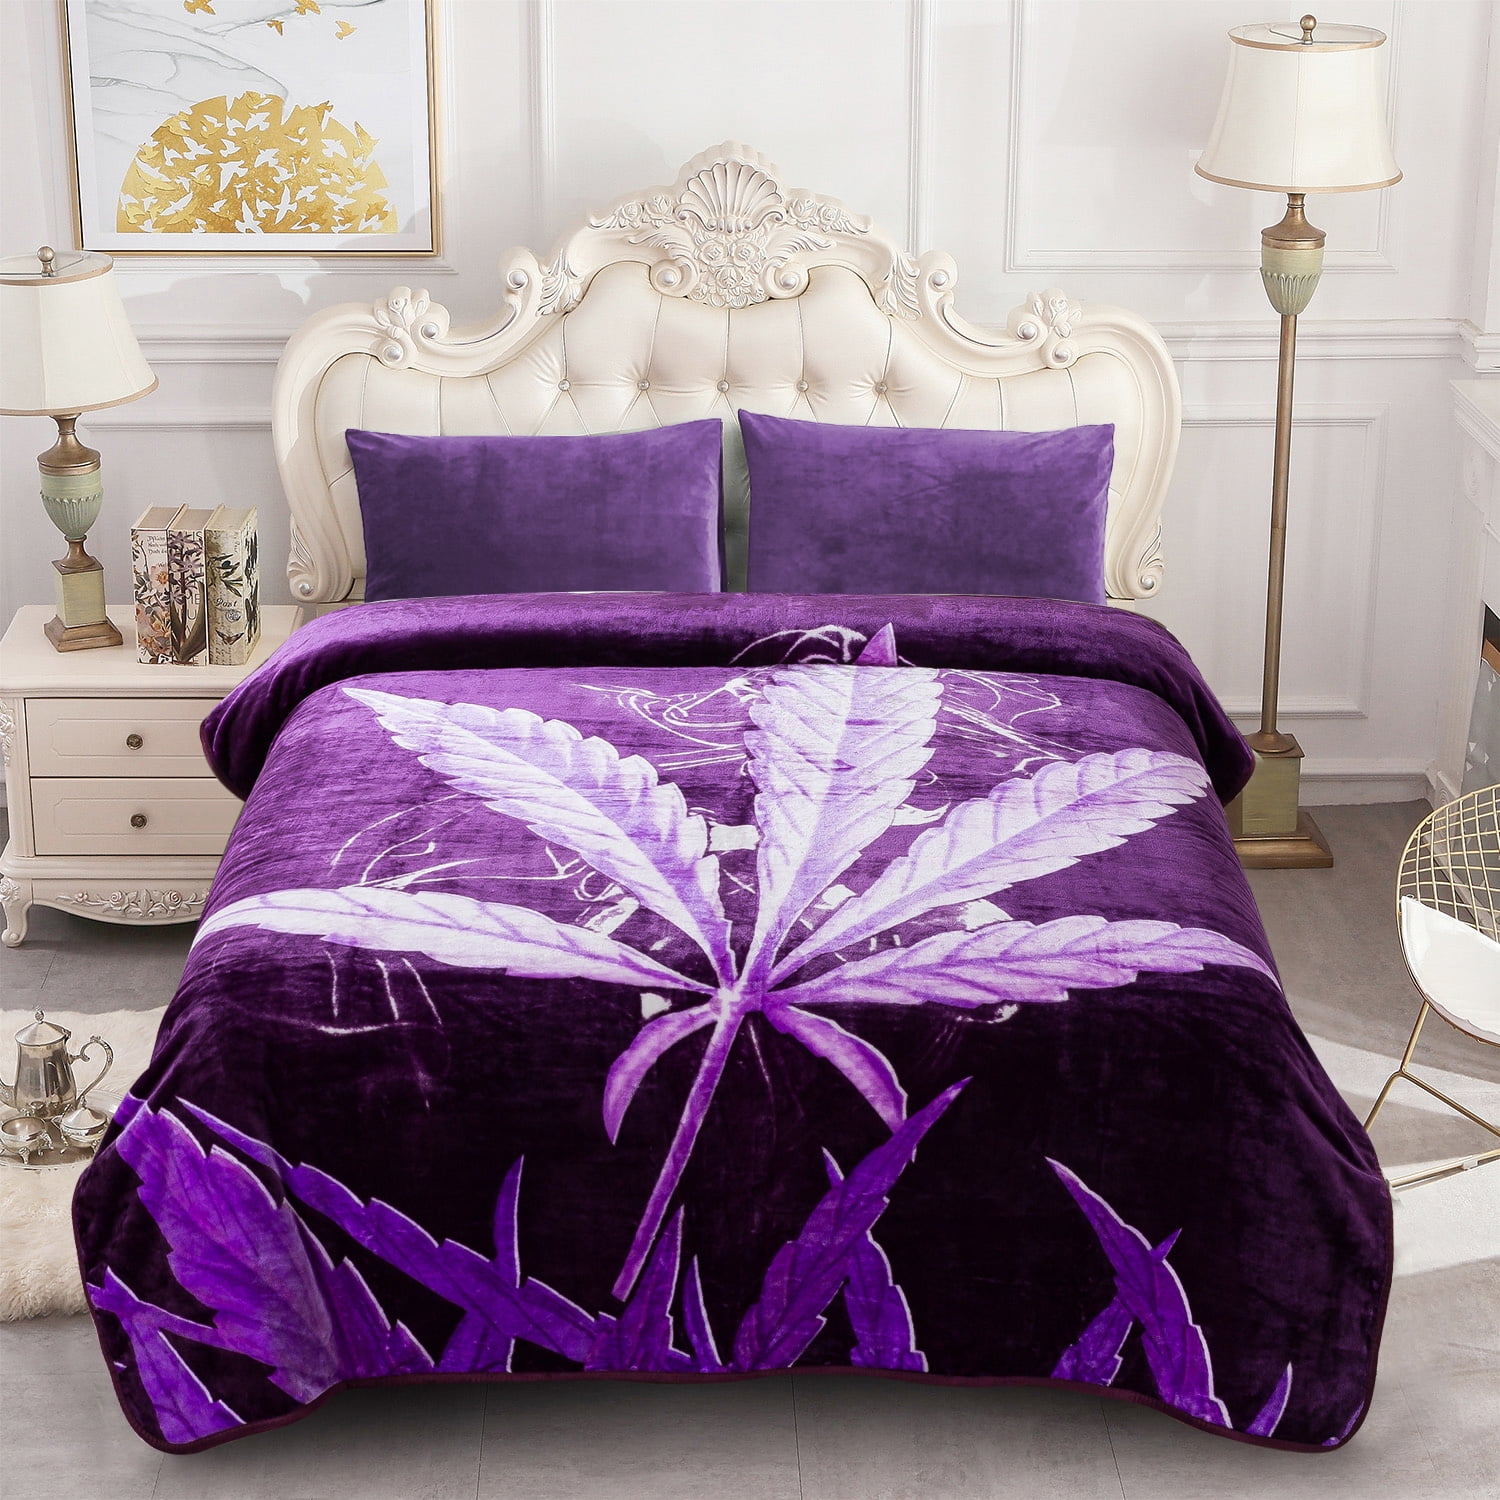 NC Plush Fleece Blanket For Bed,Lightweight Soft Burgundy Pink Floral  Blanket,Queen 75x91 